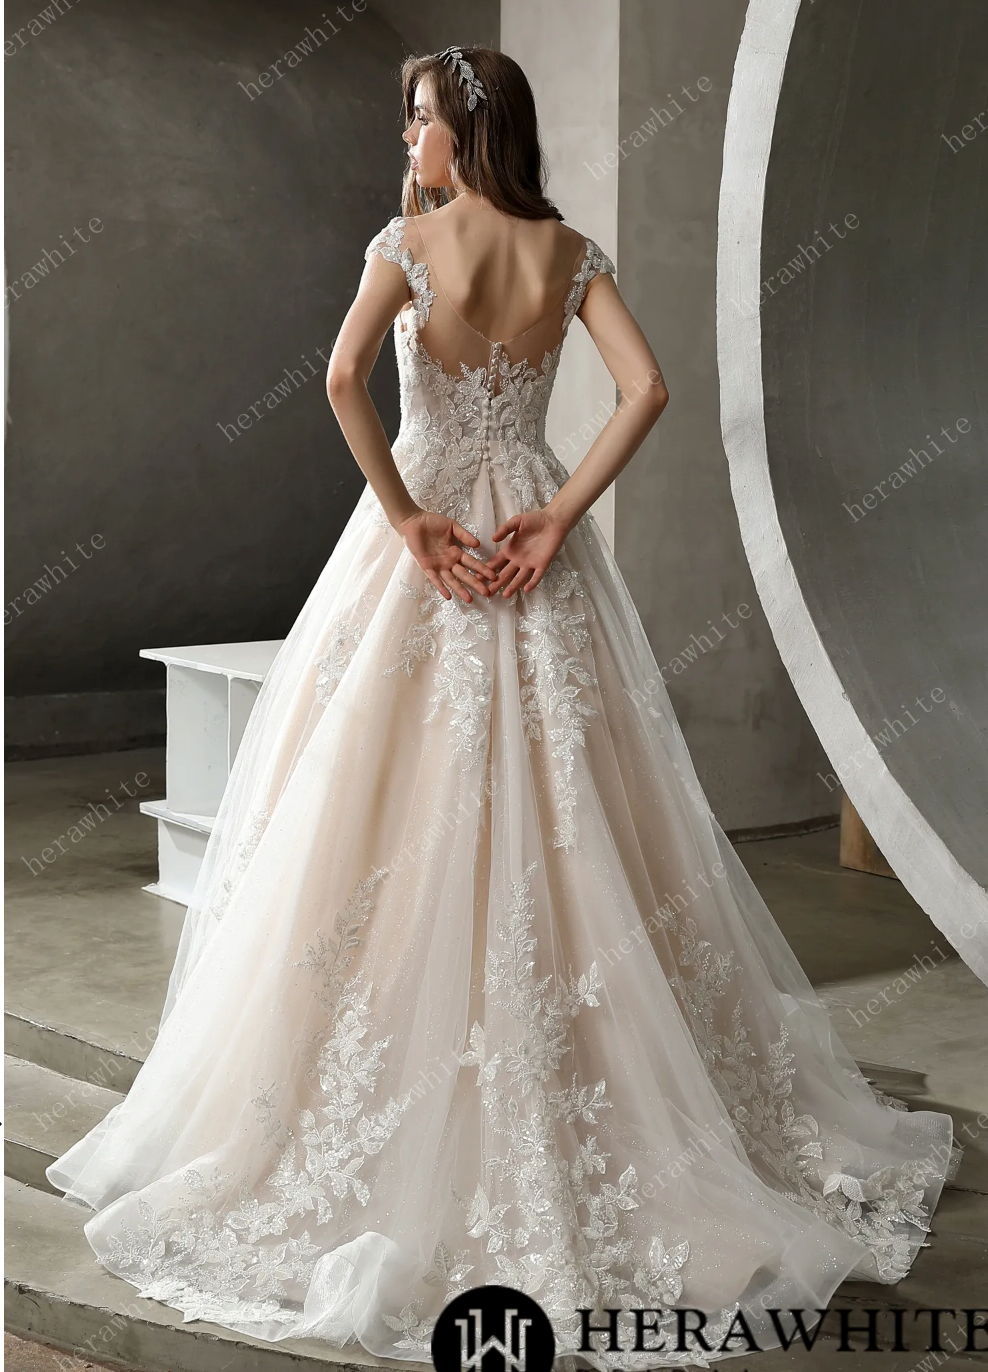 Illusion Neckline Beaded Lace A-line Wedding Dress